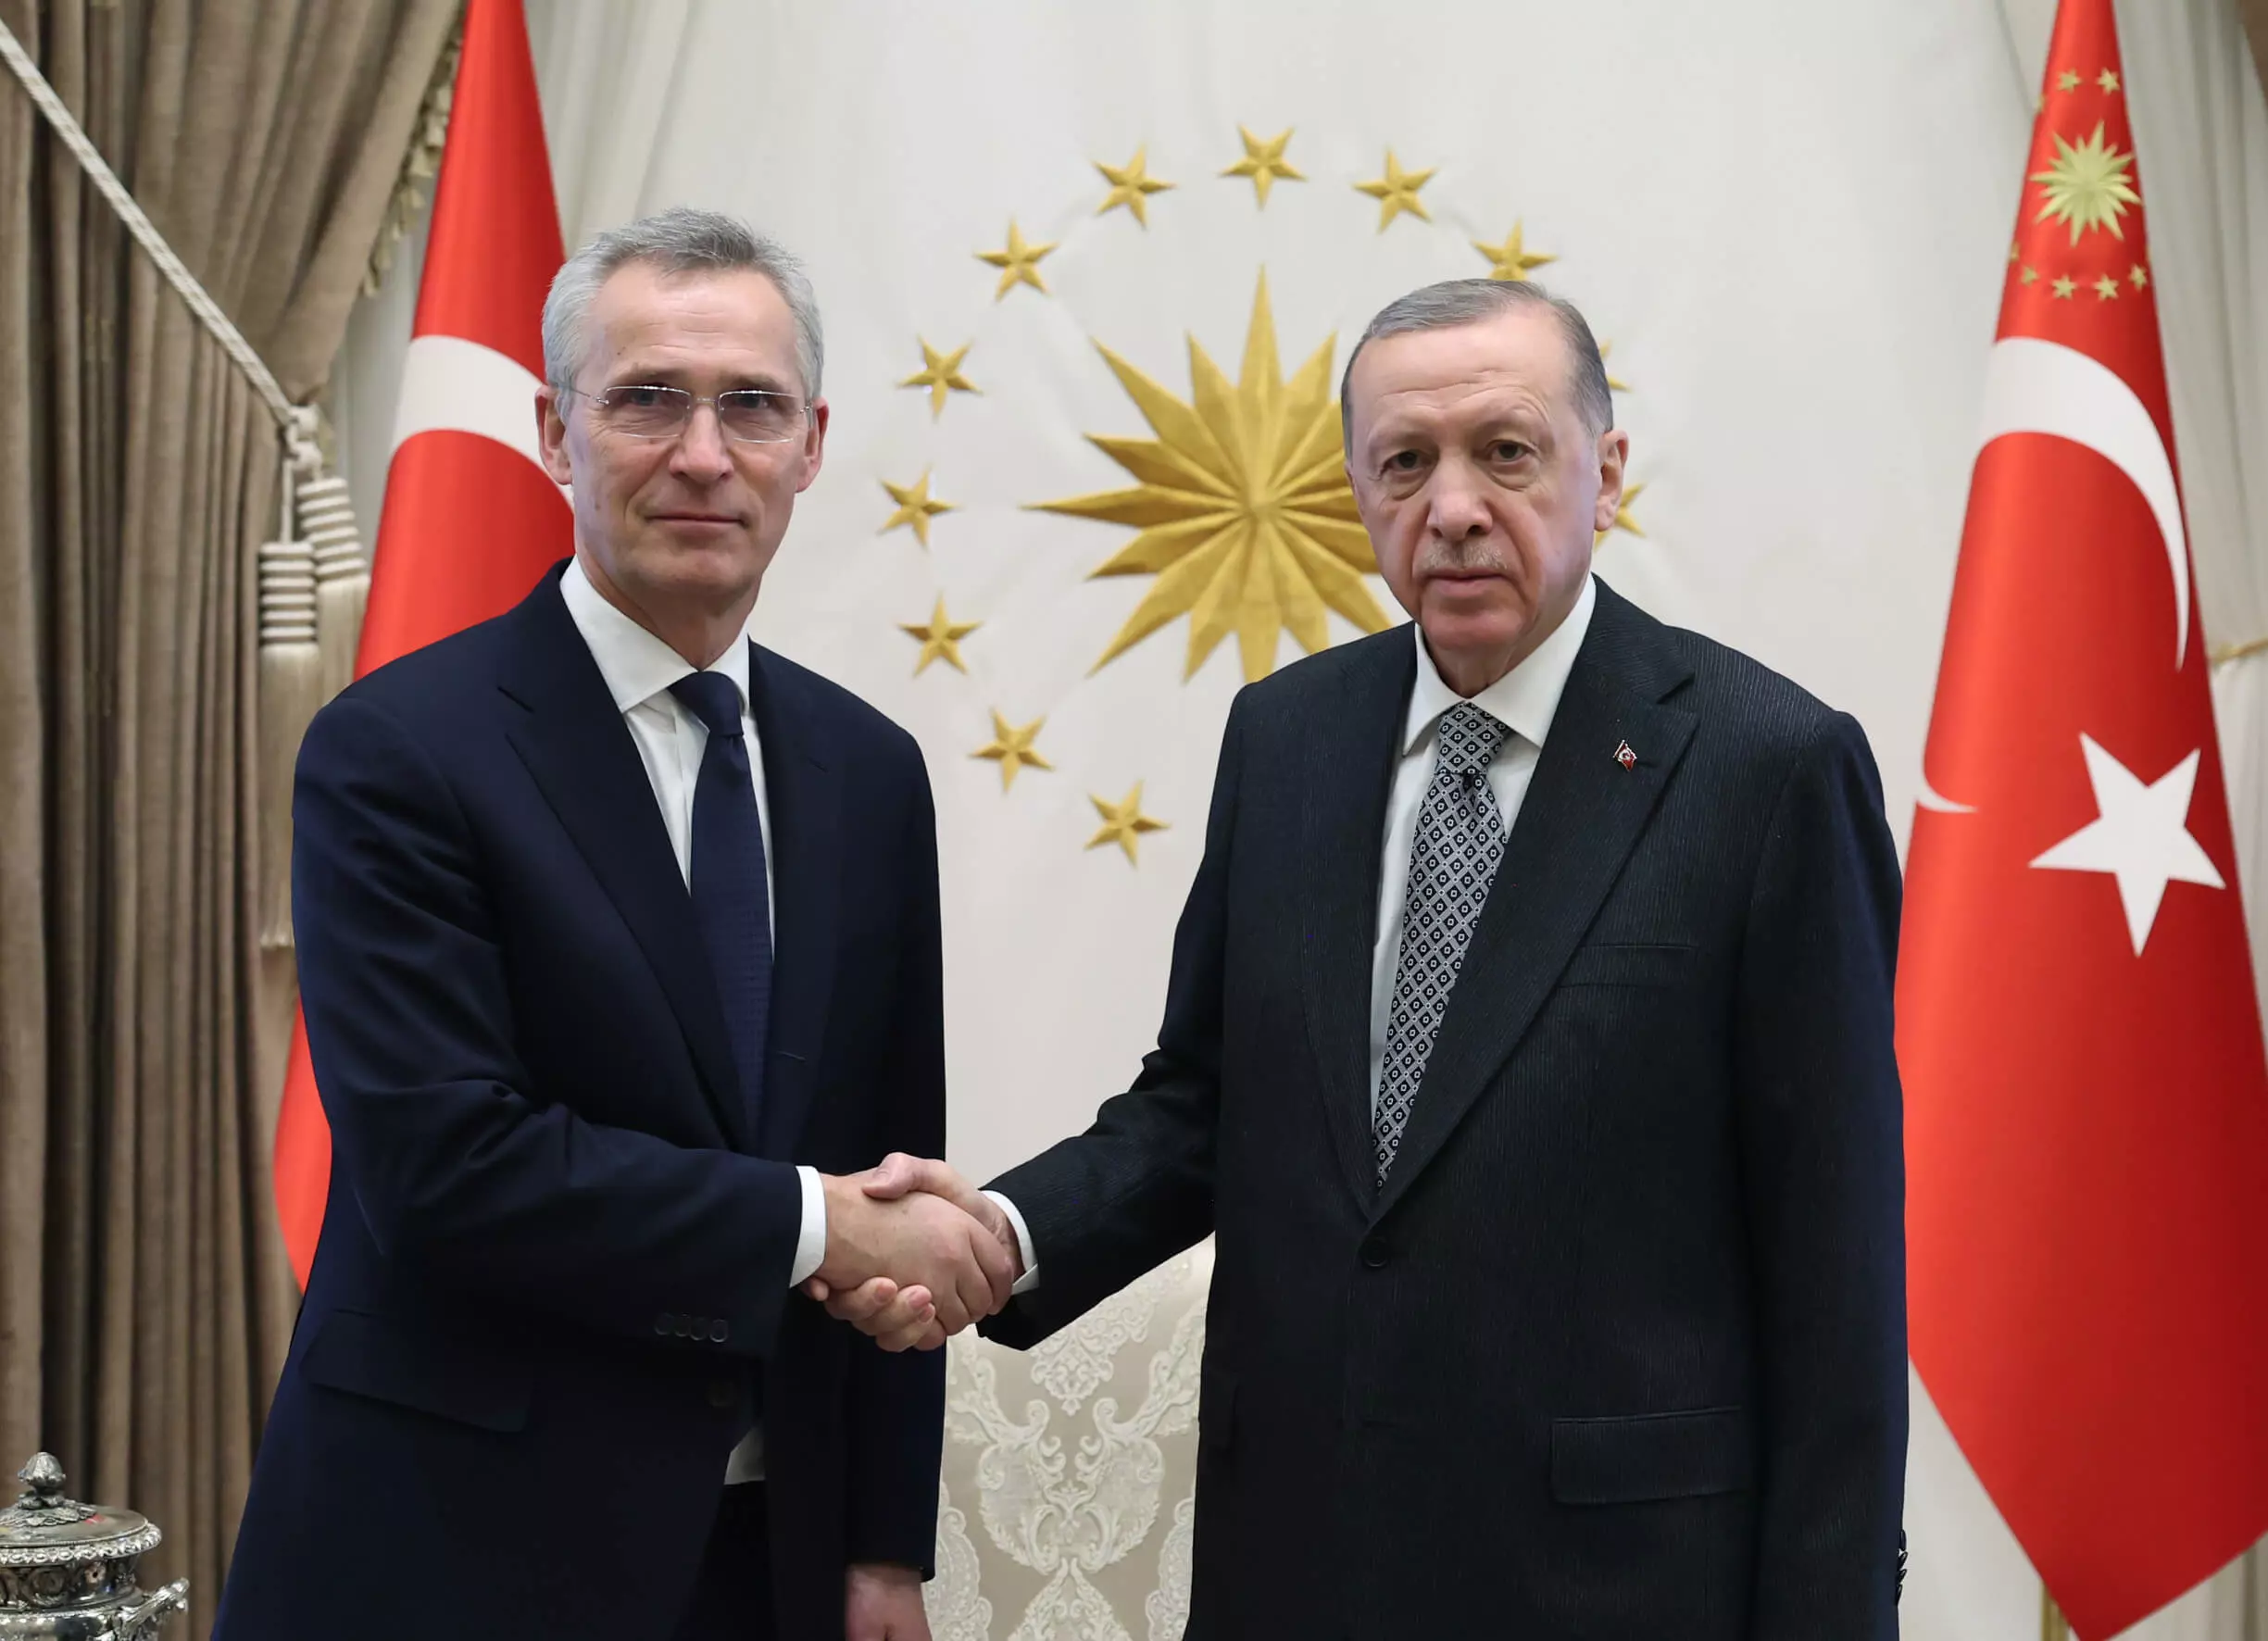 cumhurbaskani erdogan turkiye ye gelen nato genel sekreteri stoltenberg i kabul etti 01